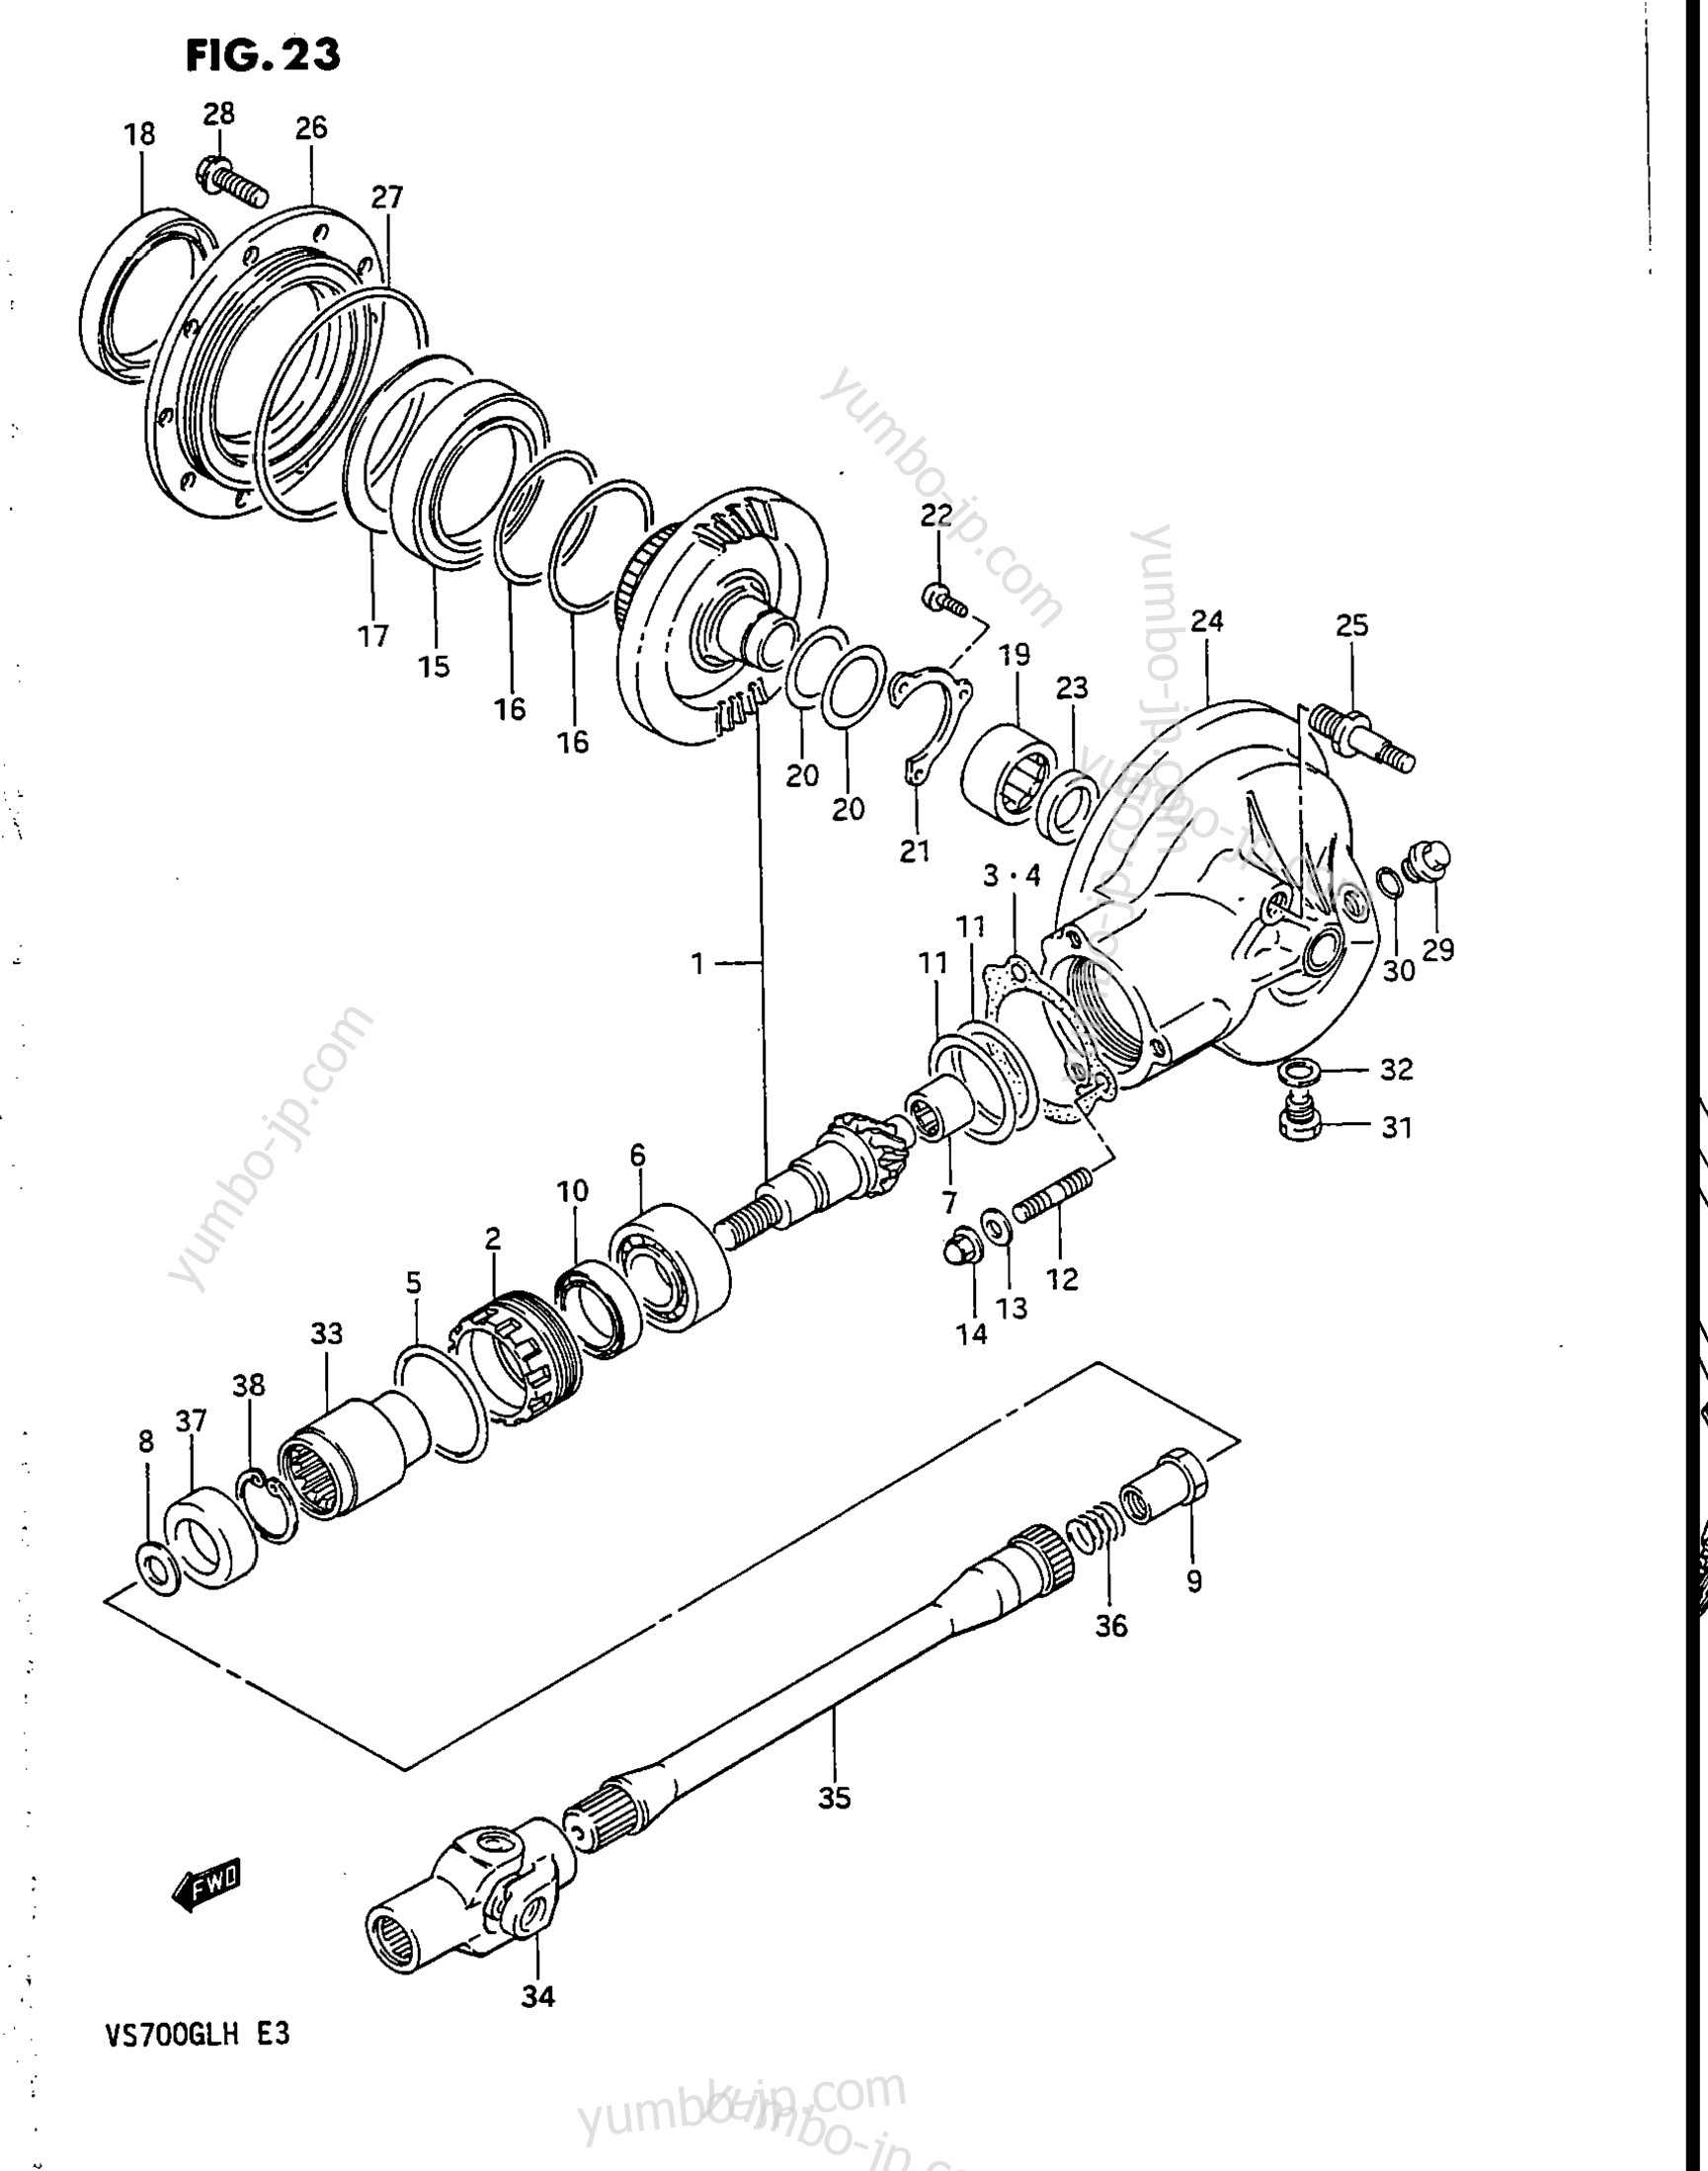 PROPELLER SHAFT - FINAL DRIVE GEAR for motorcycles SUZUKI Intruder (VS700GLF) 1986 year